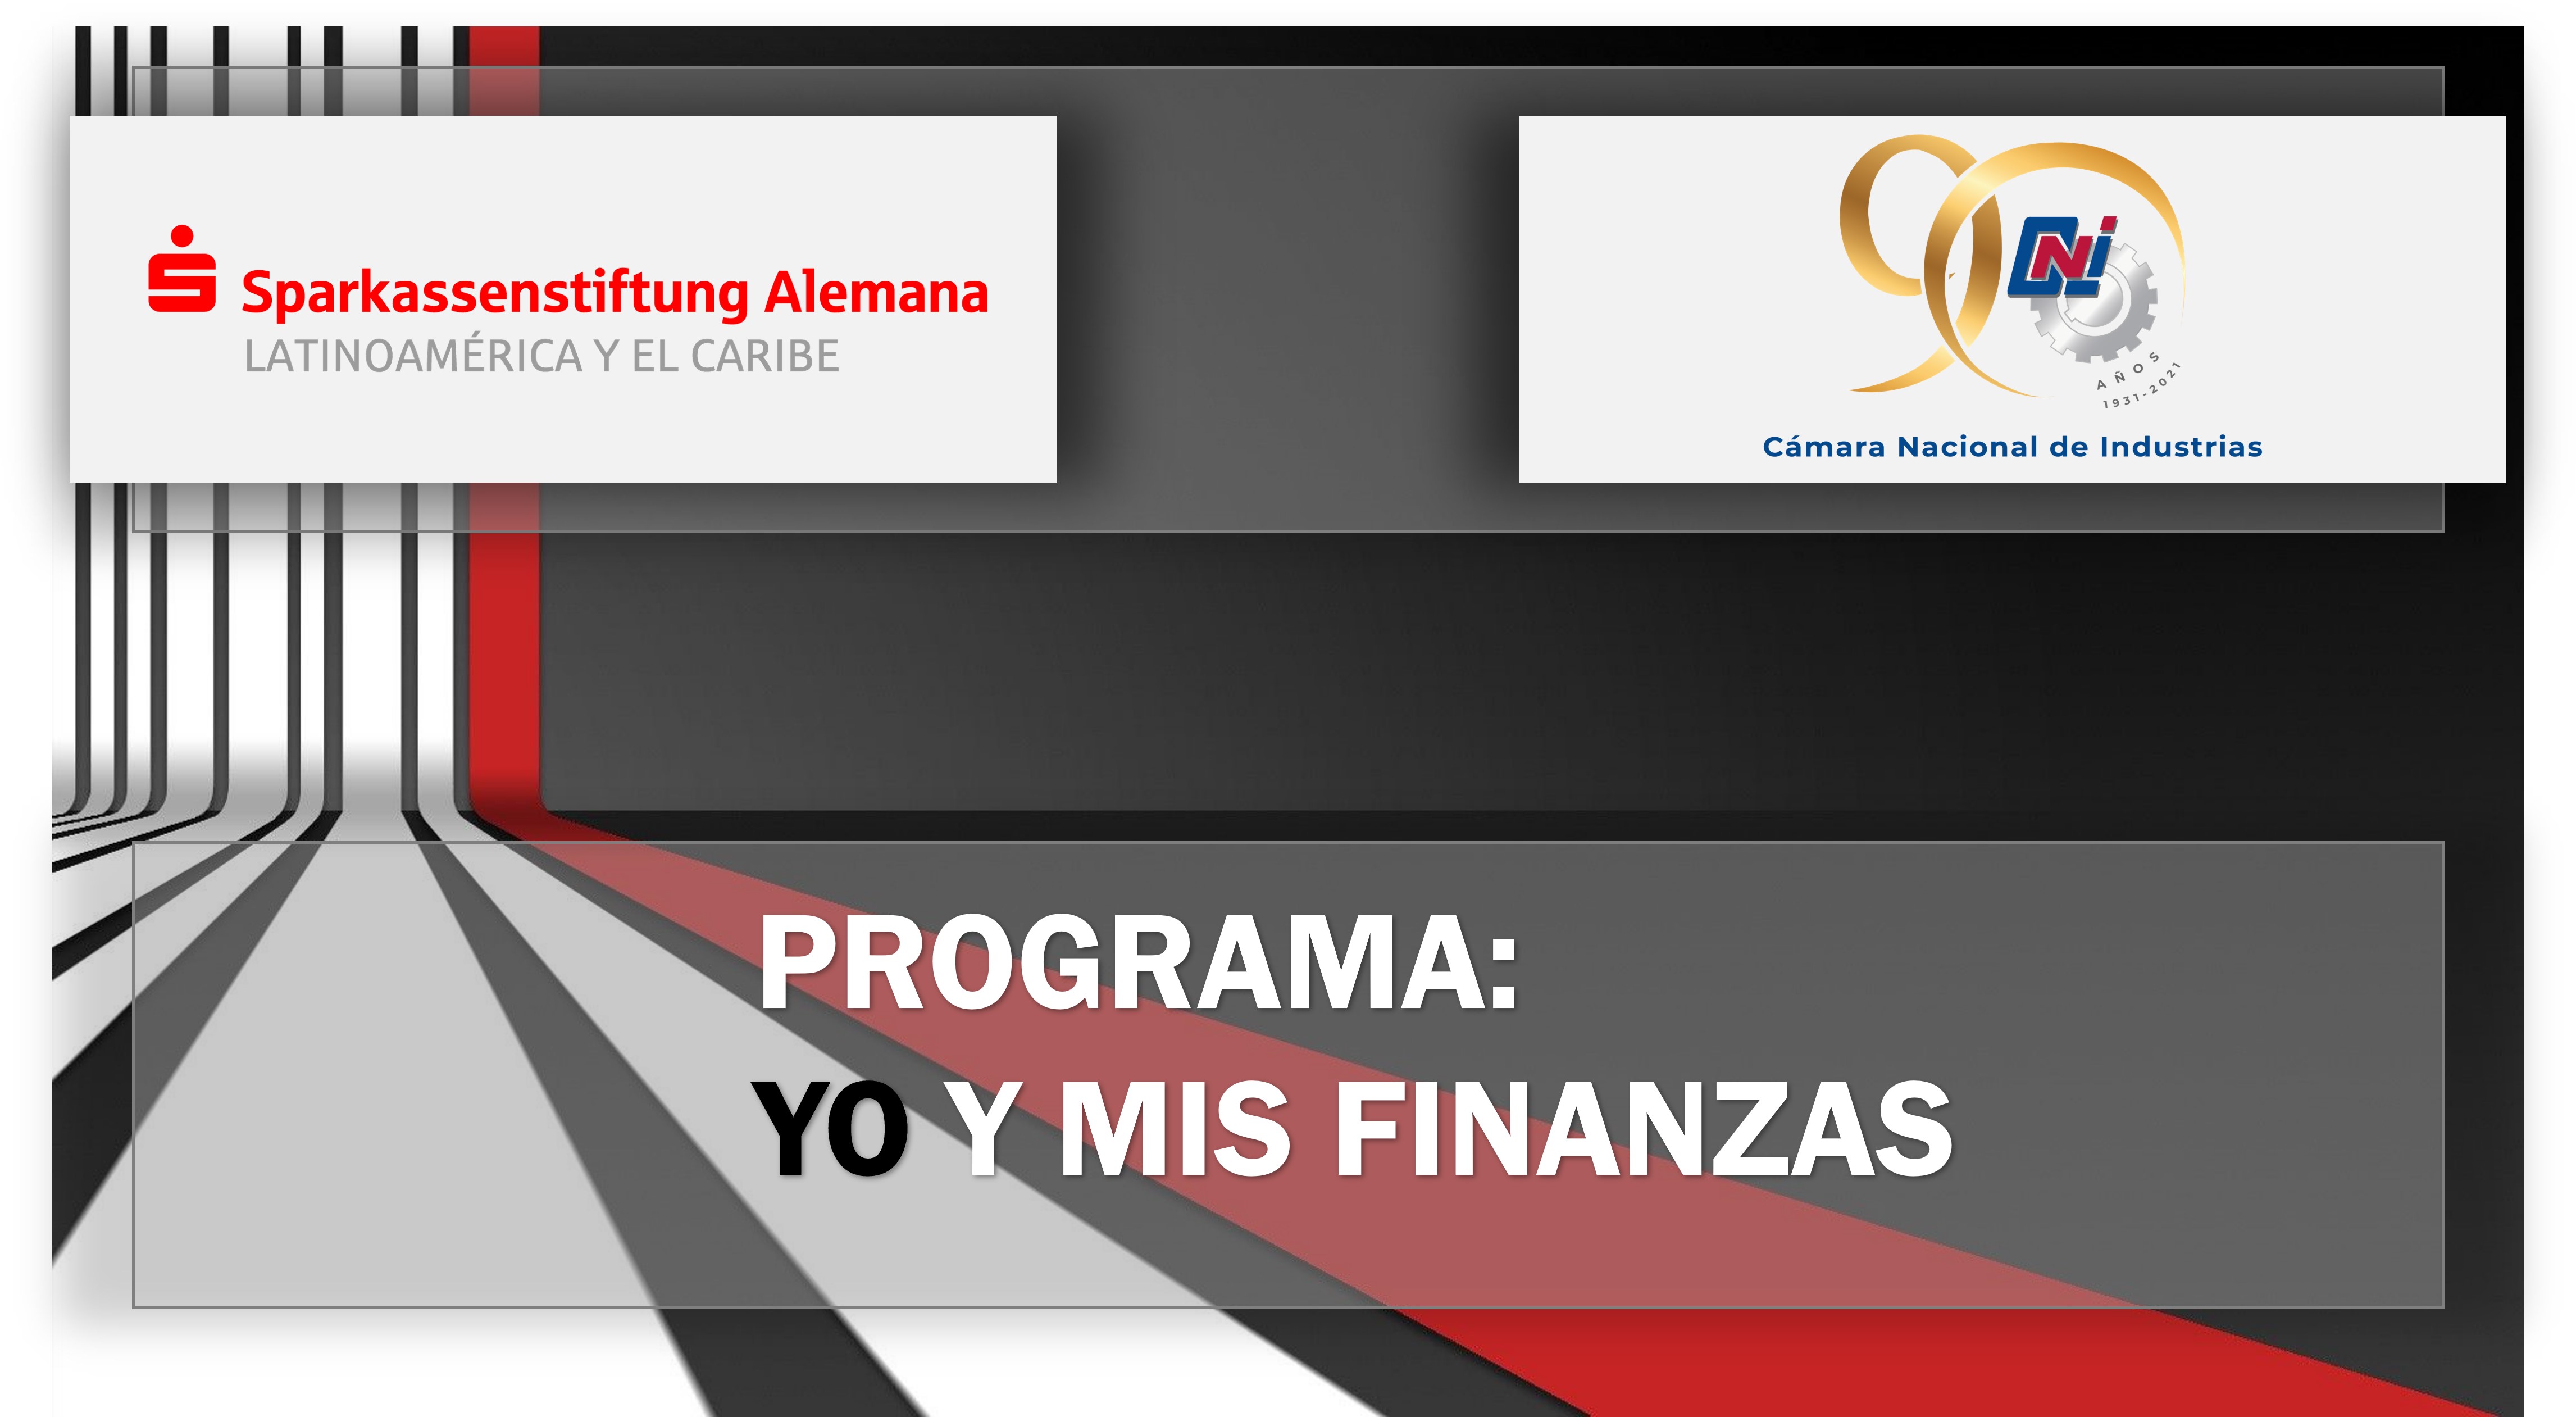 Programa: Yo y mis Finanzas CNI